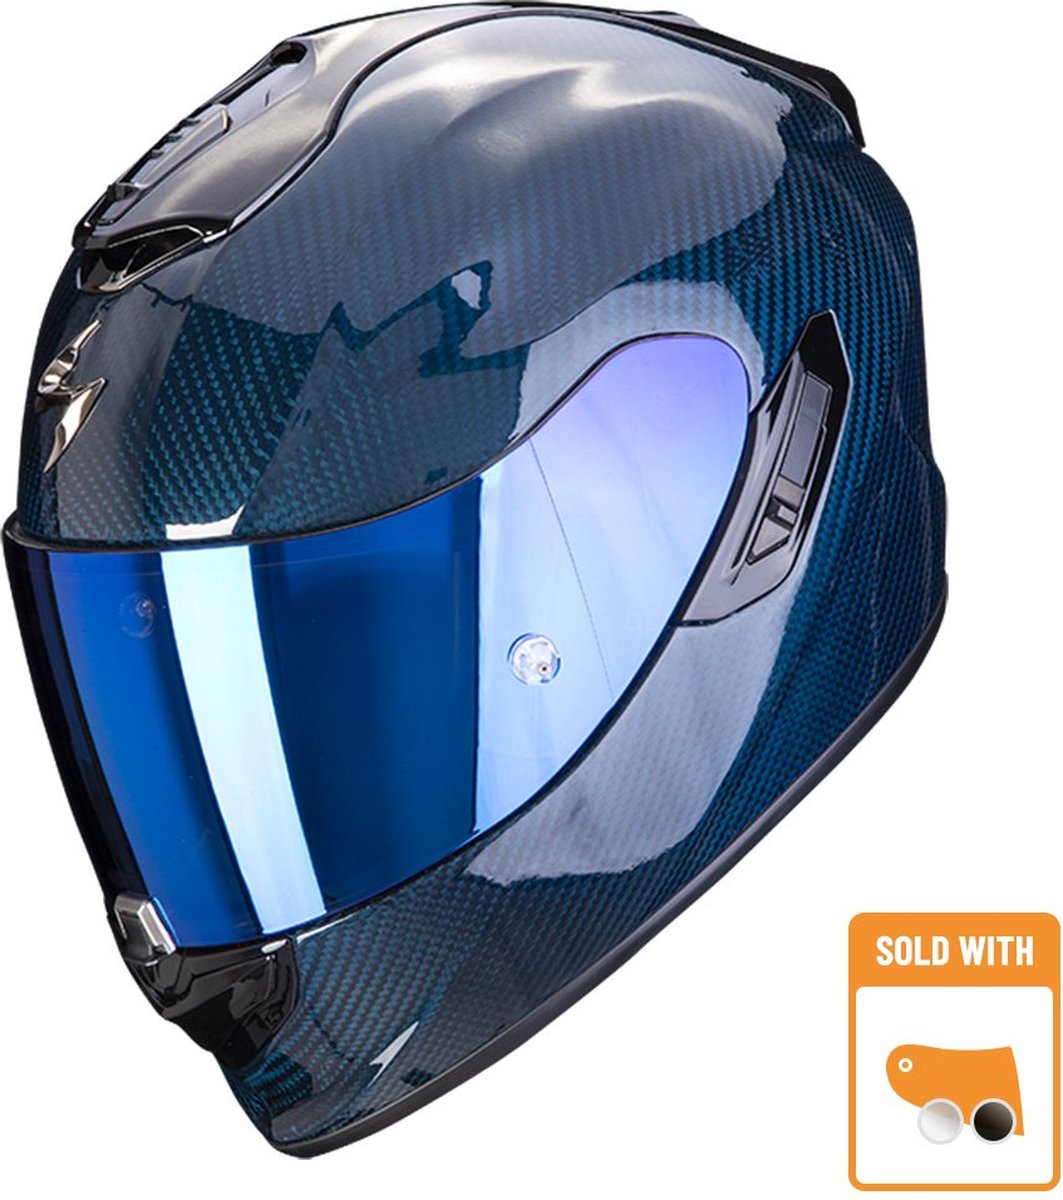 Scorpion Exo-1400 Evo Carbon Air Solid Blauw Integraalhelm L